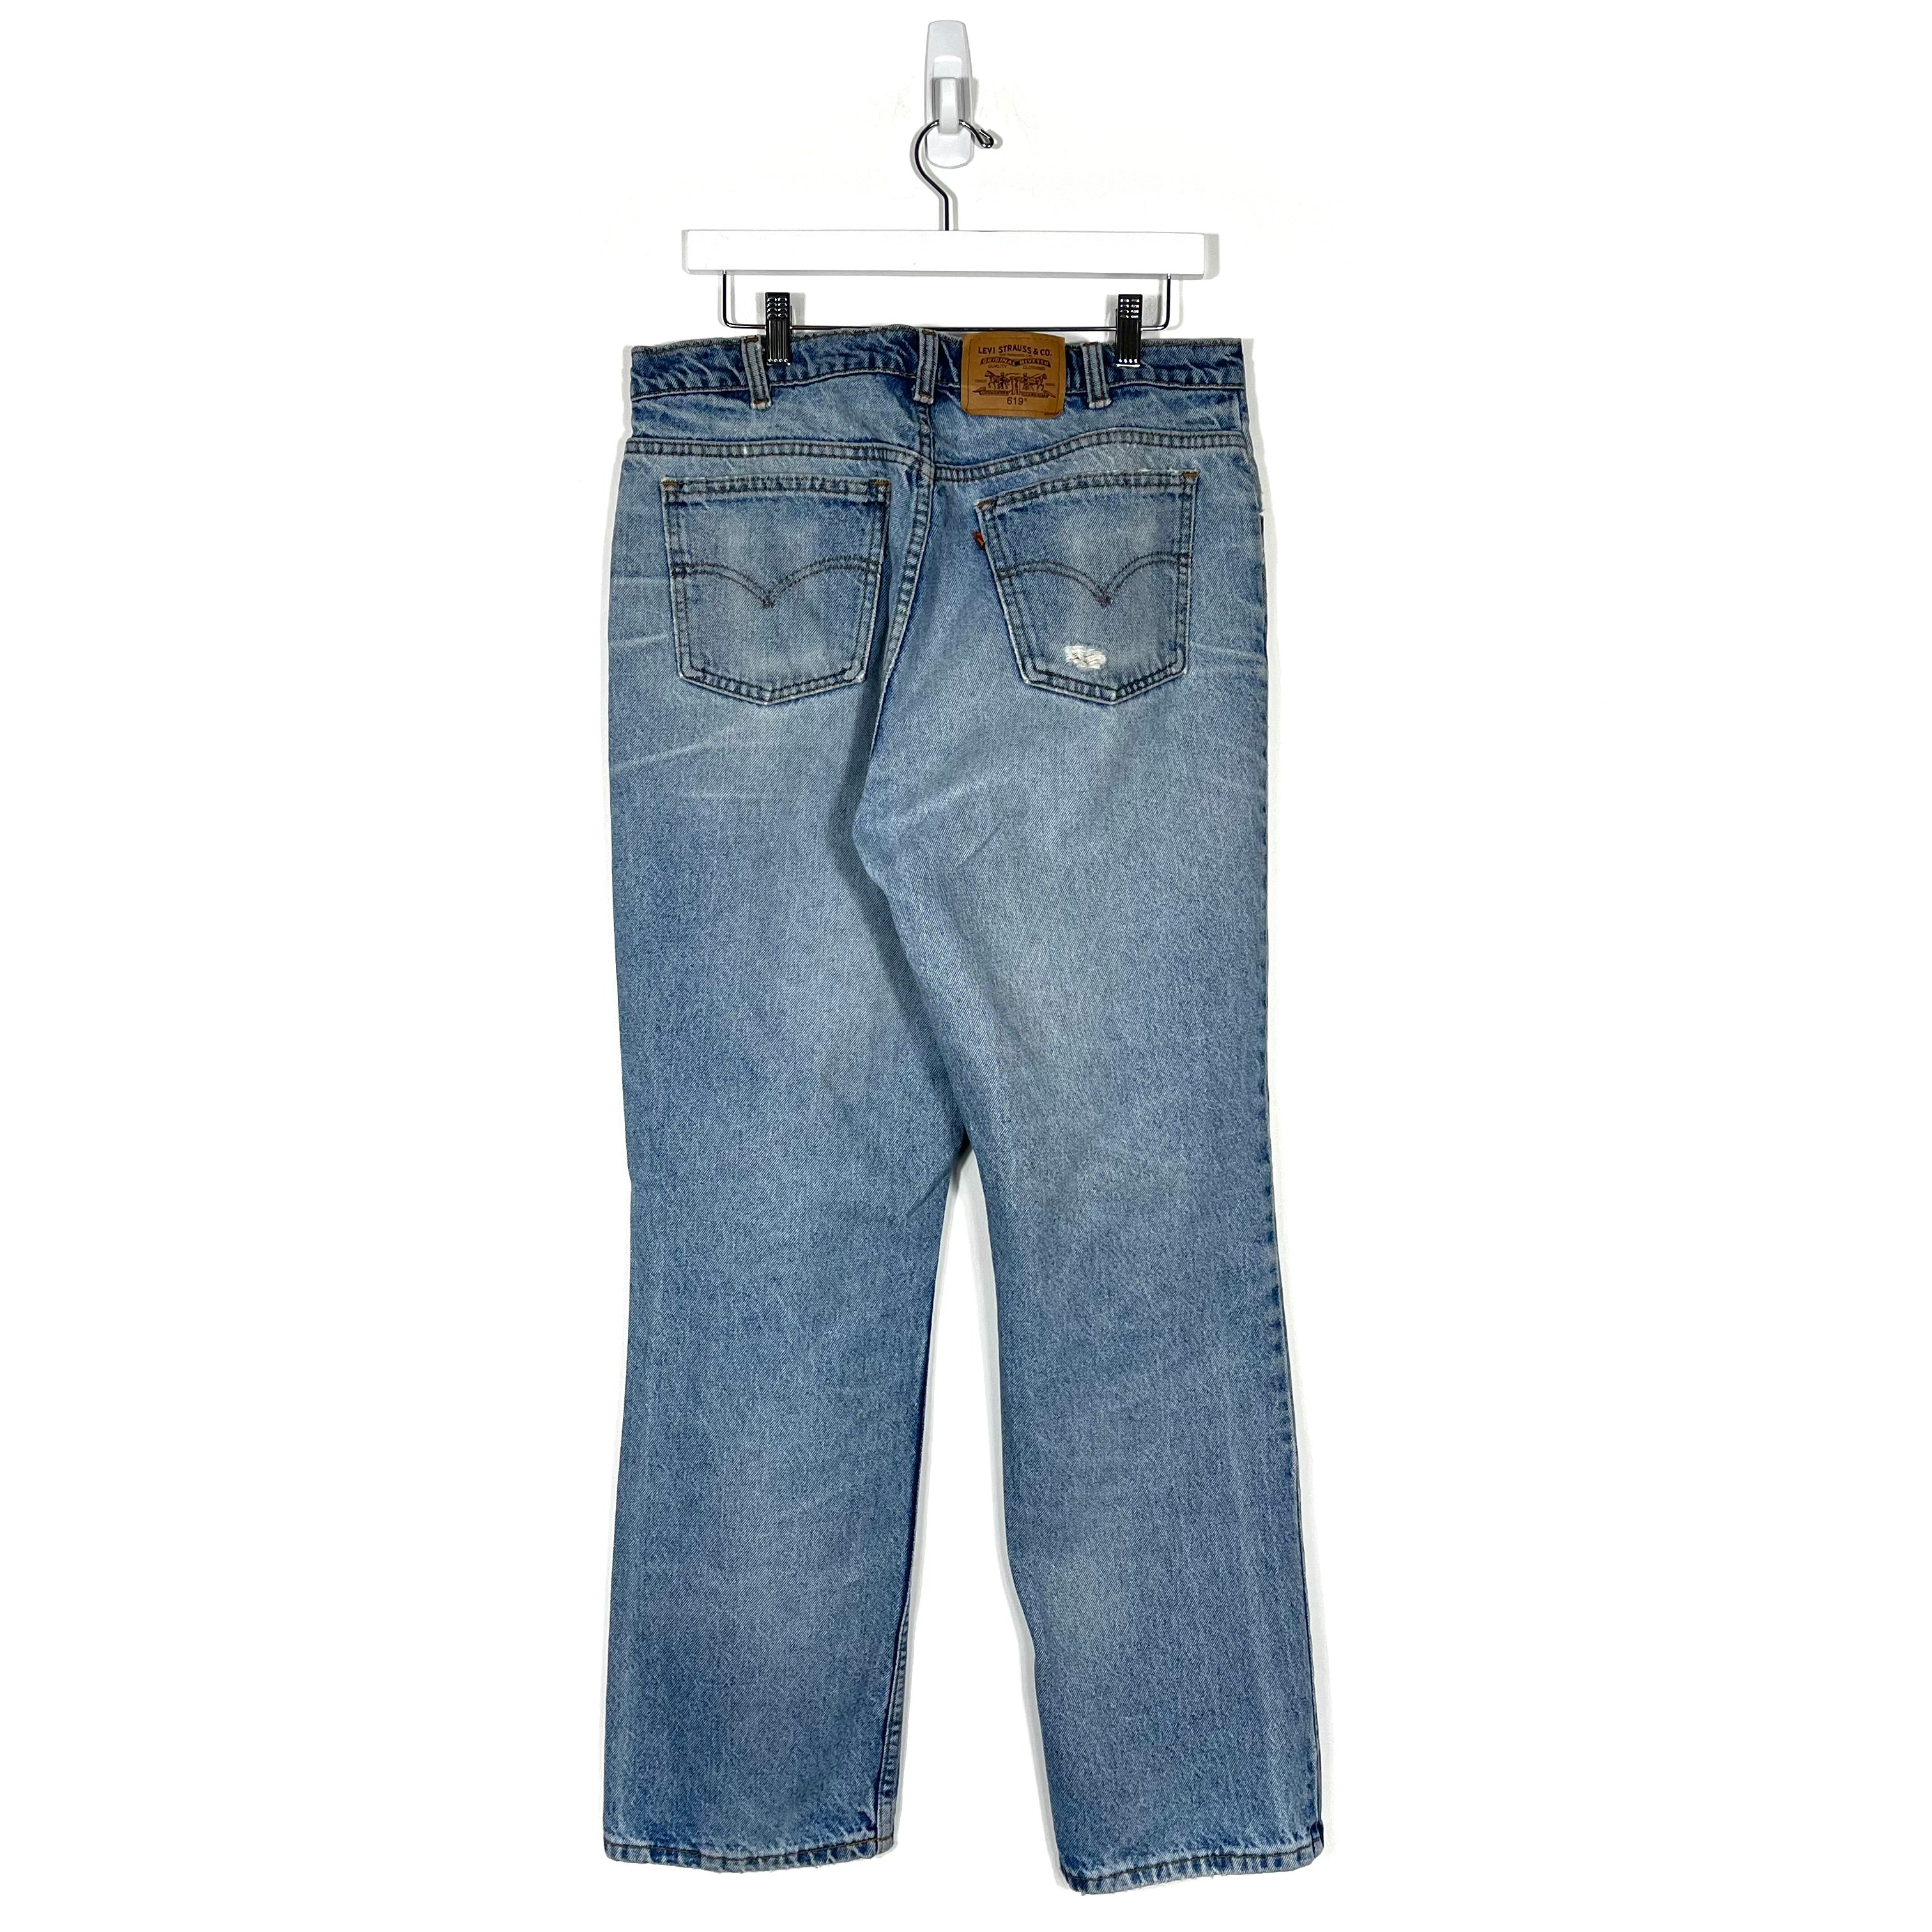 Vintage Levis 619 Orange Tab Jeans - Men's 36/32